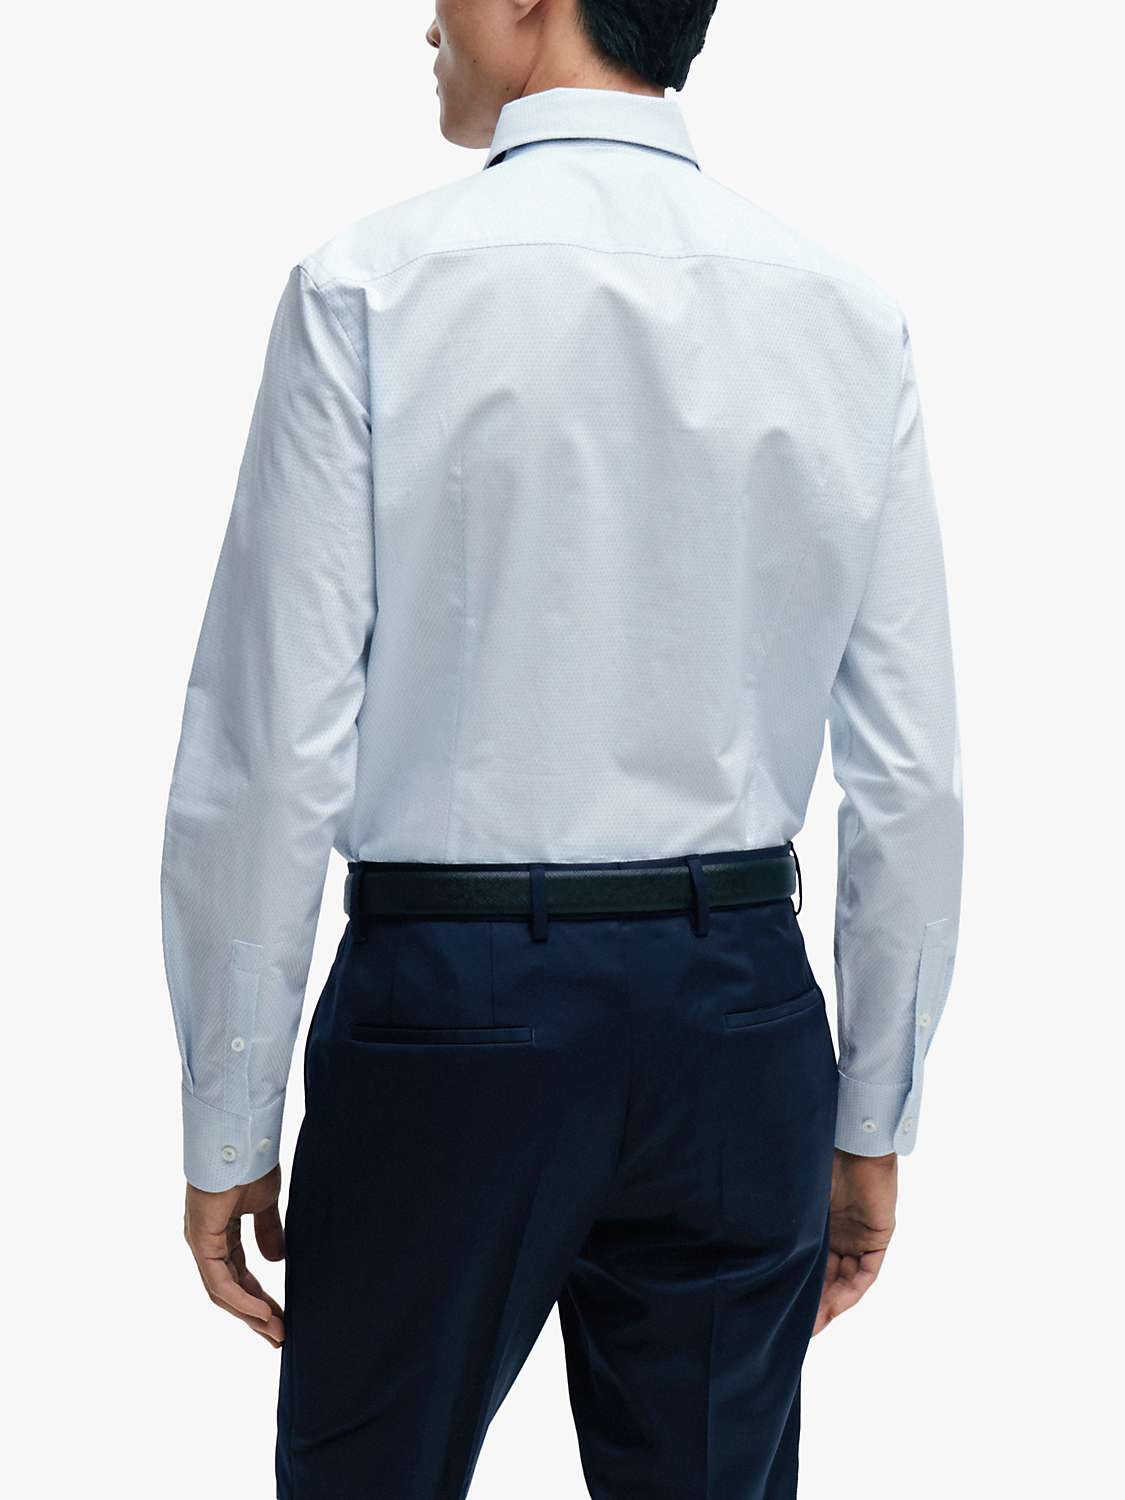 Buy BOSS H-Hank Spread Long Sleeve Shirt, Pastel Blue Online at johnlewis.com